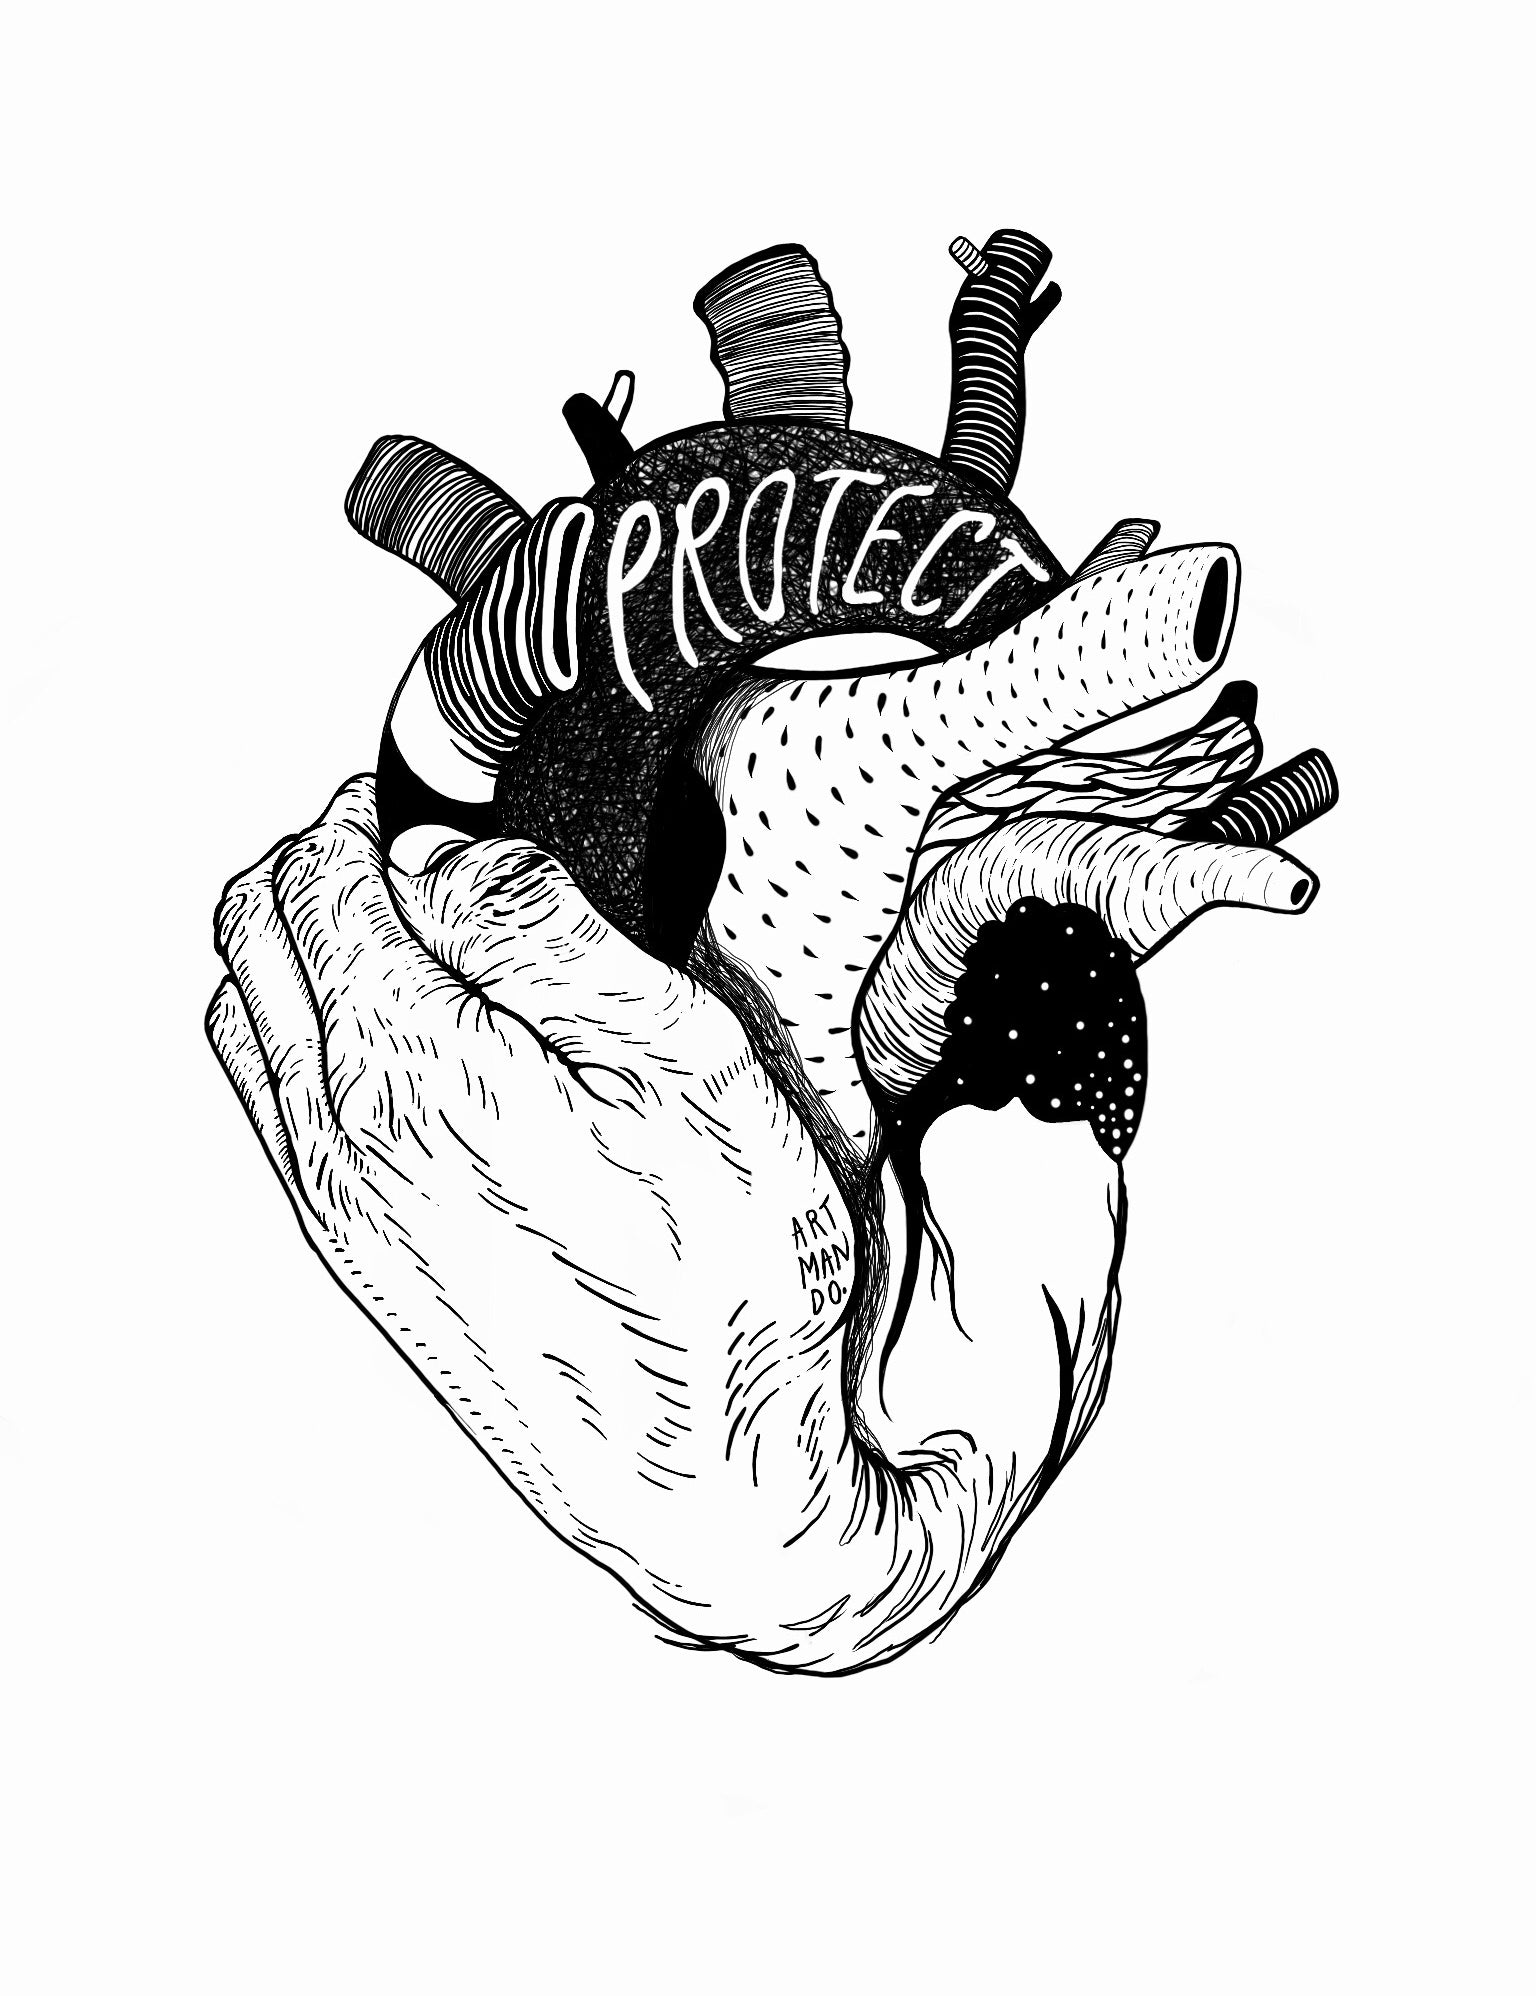 Protect Your Heart by Armando Silva